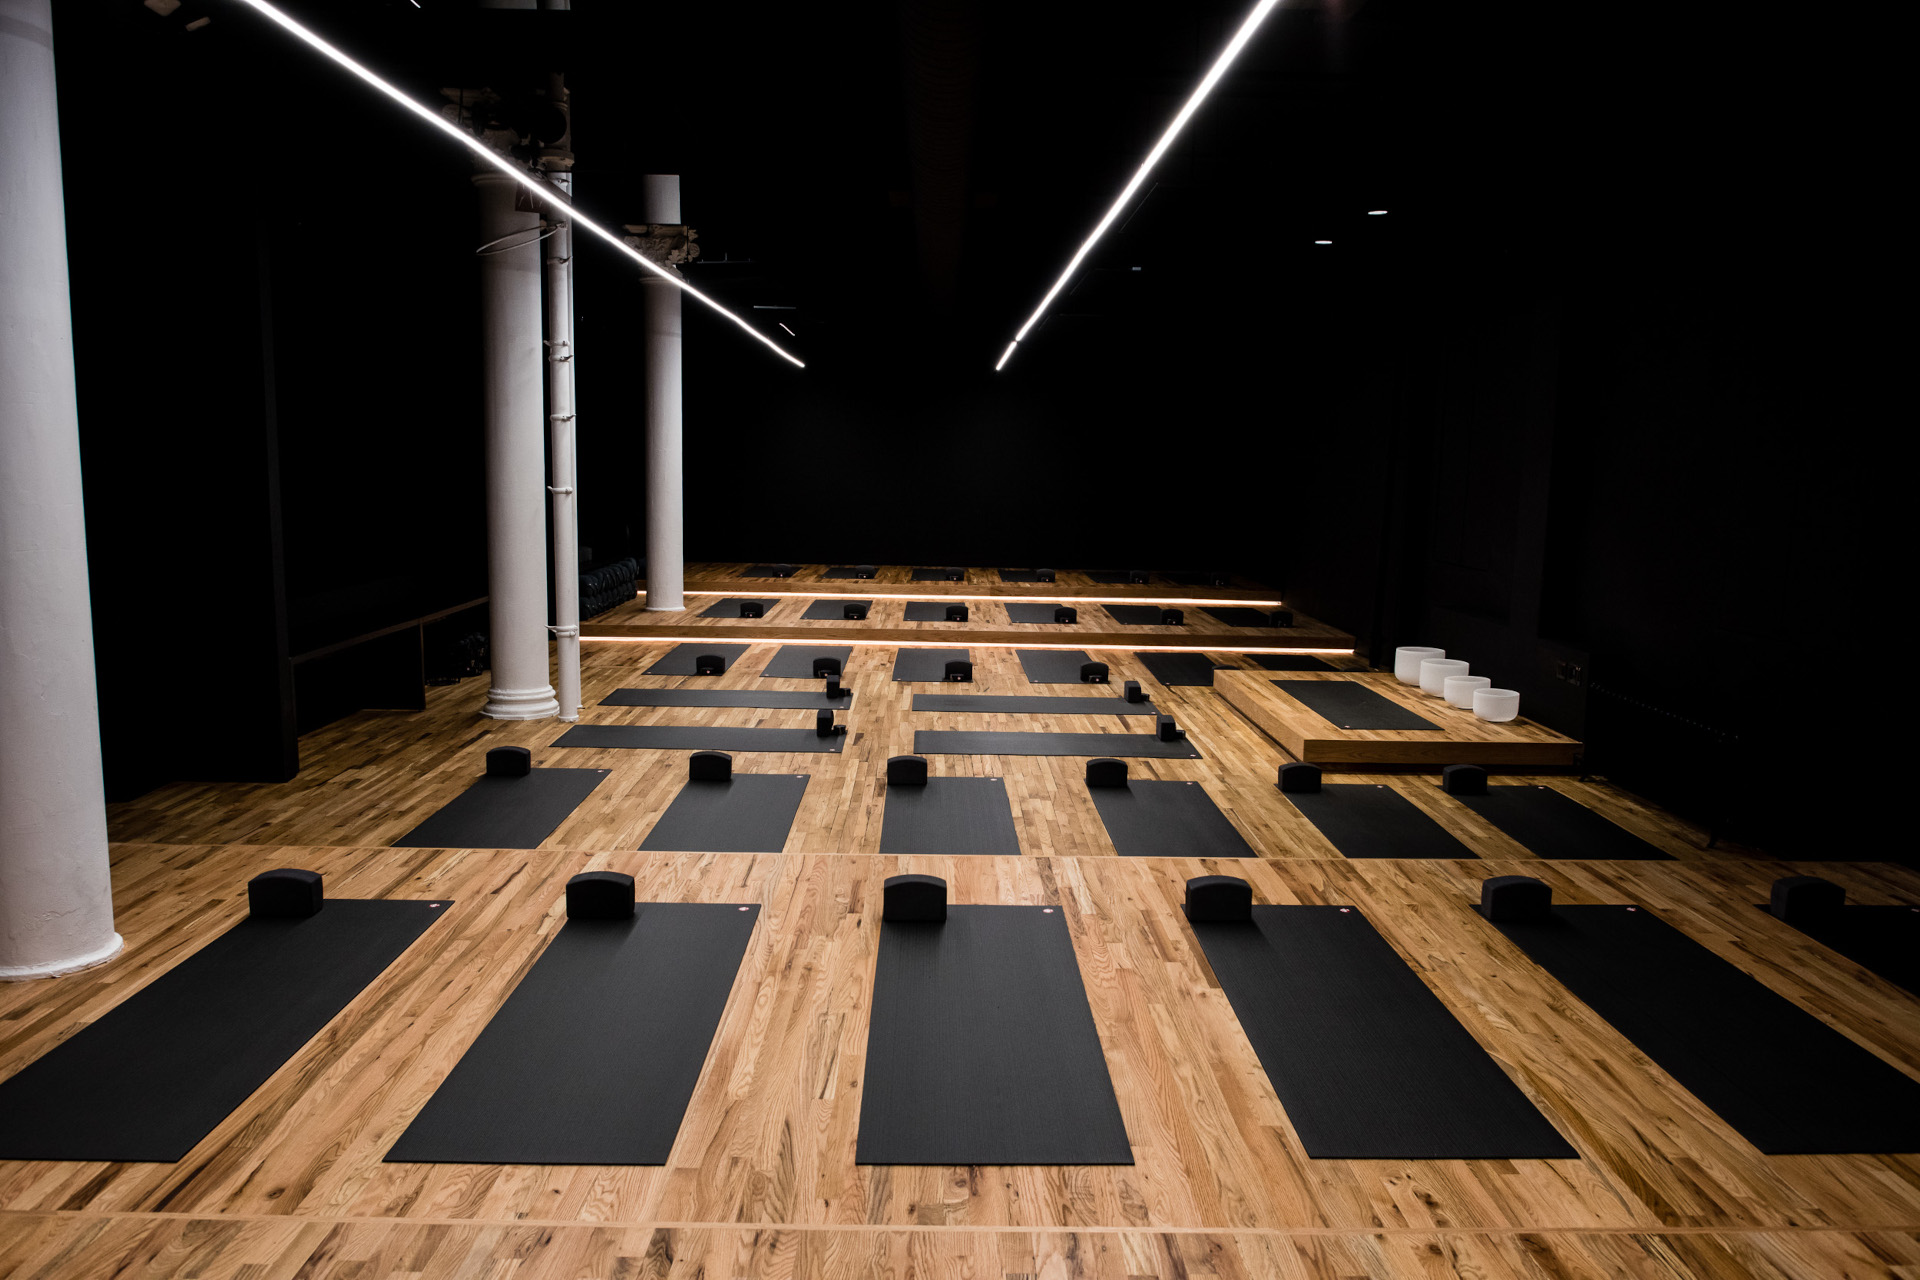 Yoga studio with black mats and walls